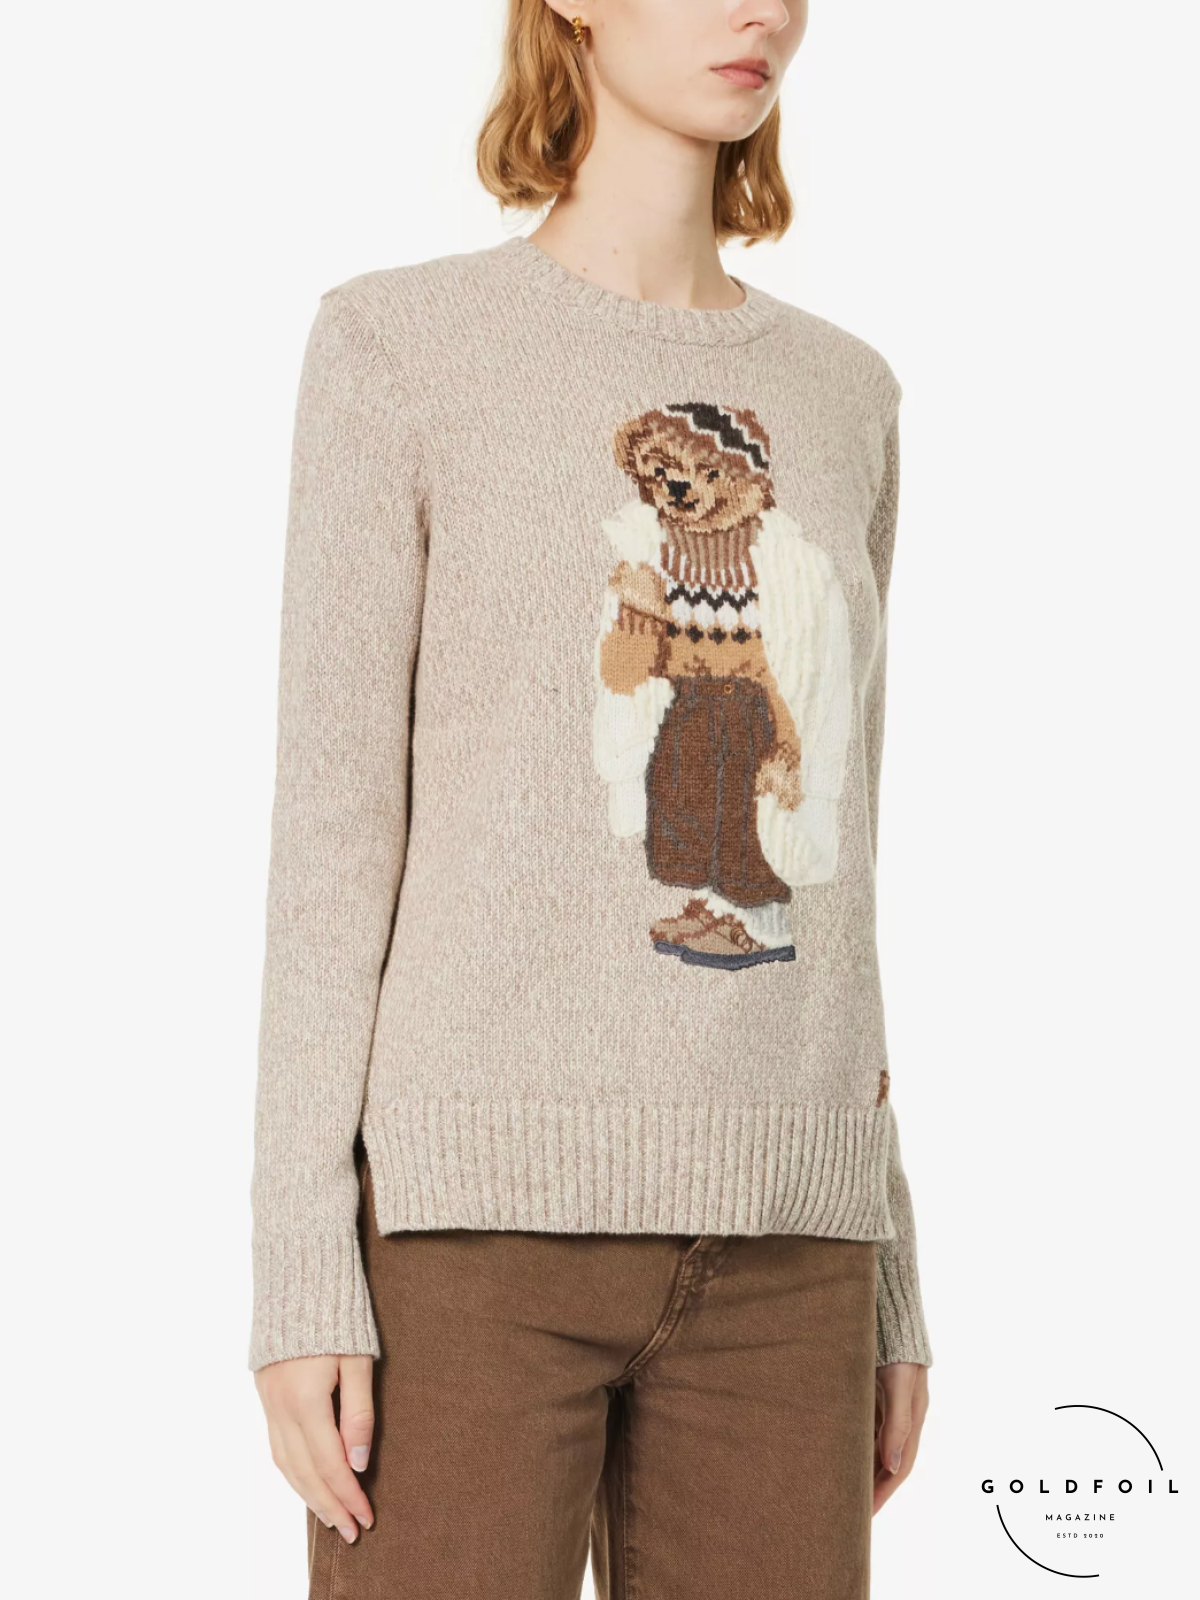 A Polo Ralph Lauren Beige Knit Jumper featuring a teddy bear is the perfect Christmas Jumper this festive season 2023